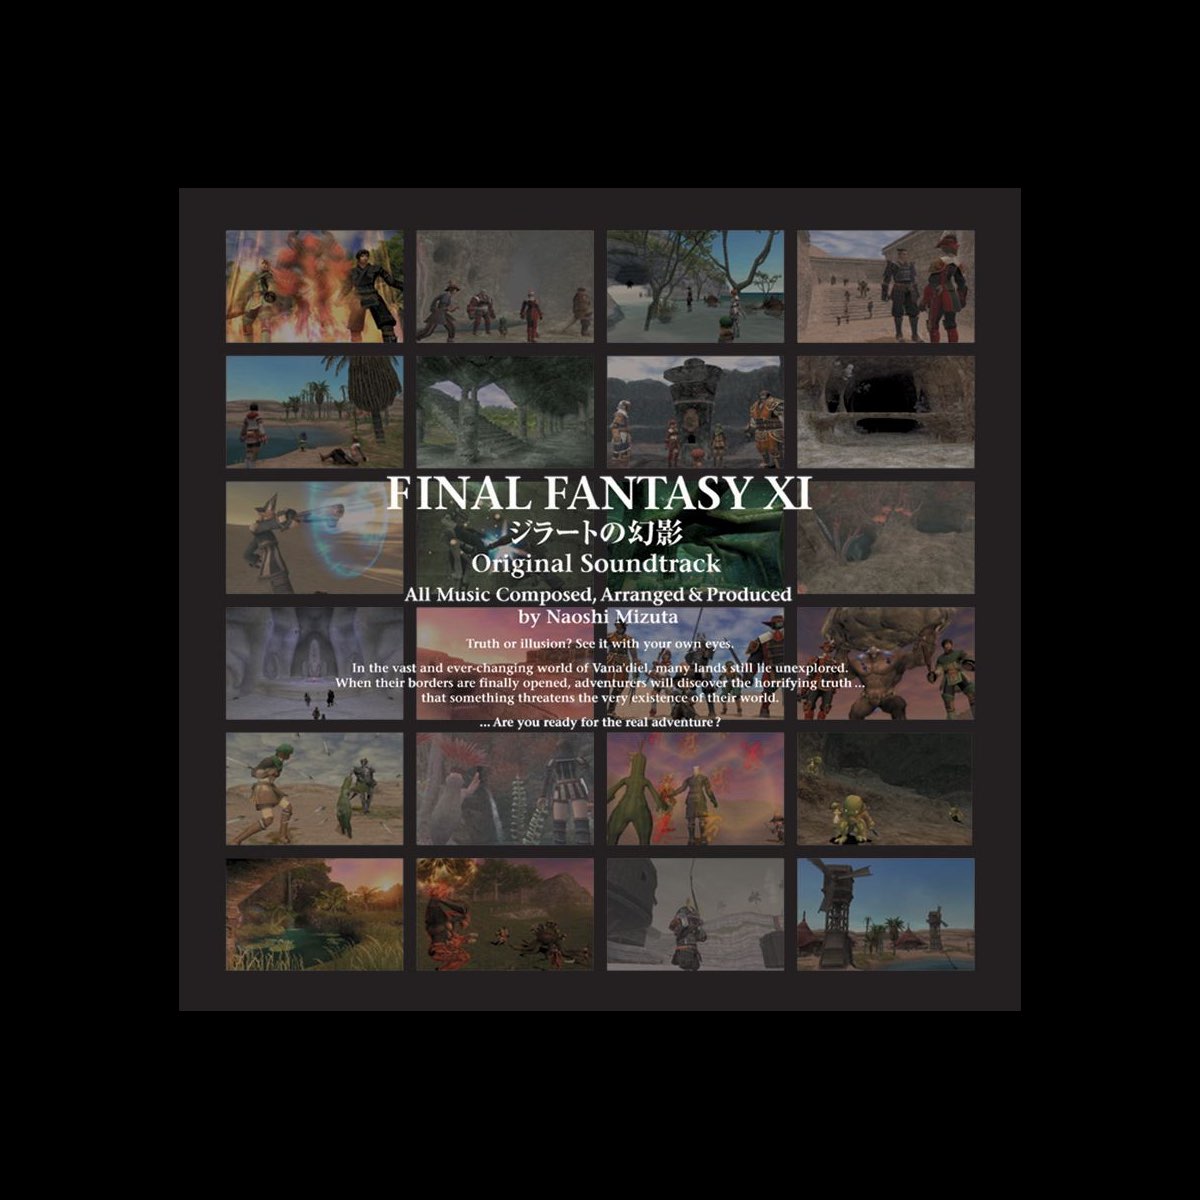 FINAL FANTASY XI Original Soundtrack PRE